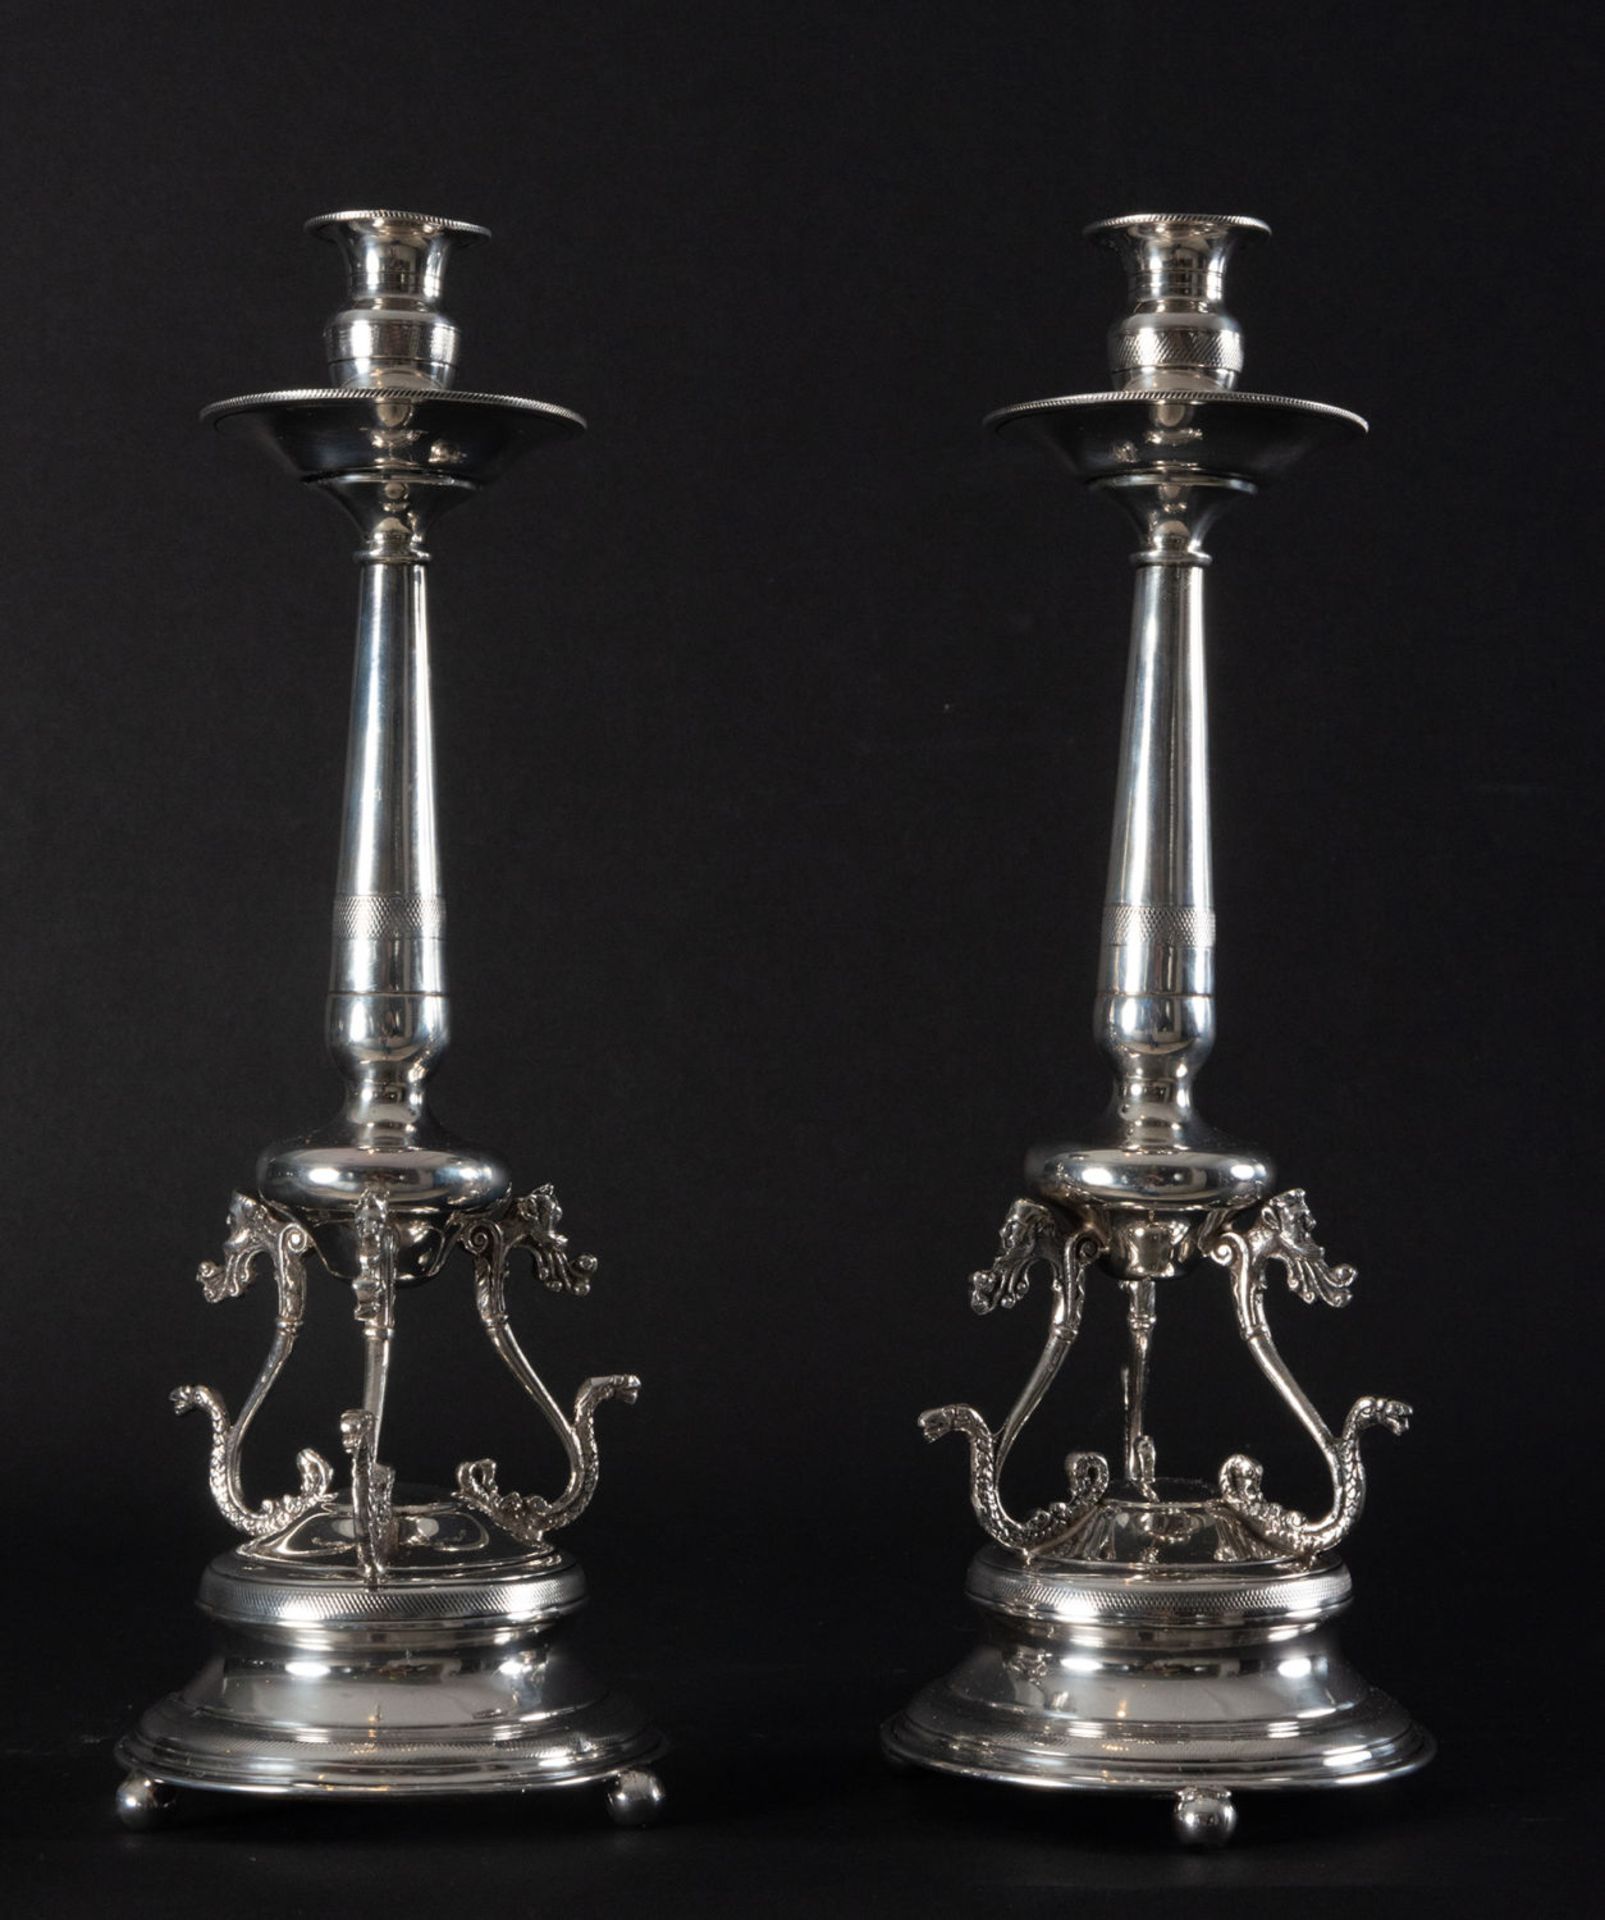 Pair of Spanish Regency-style silver candlesticks, 19th century